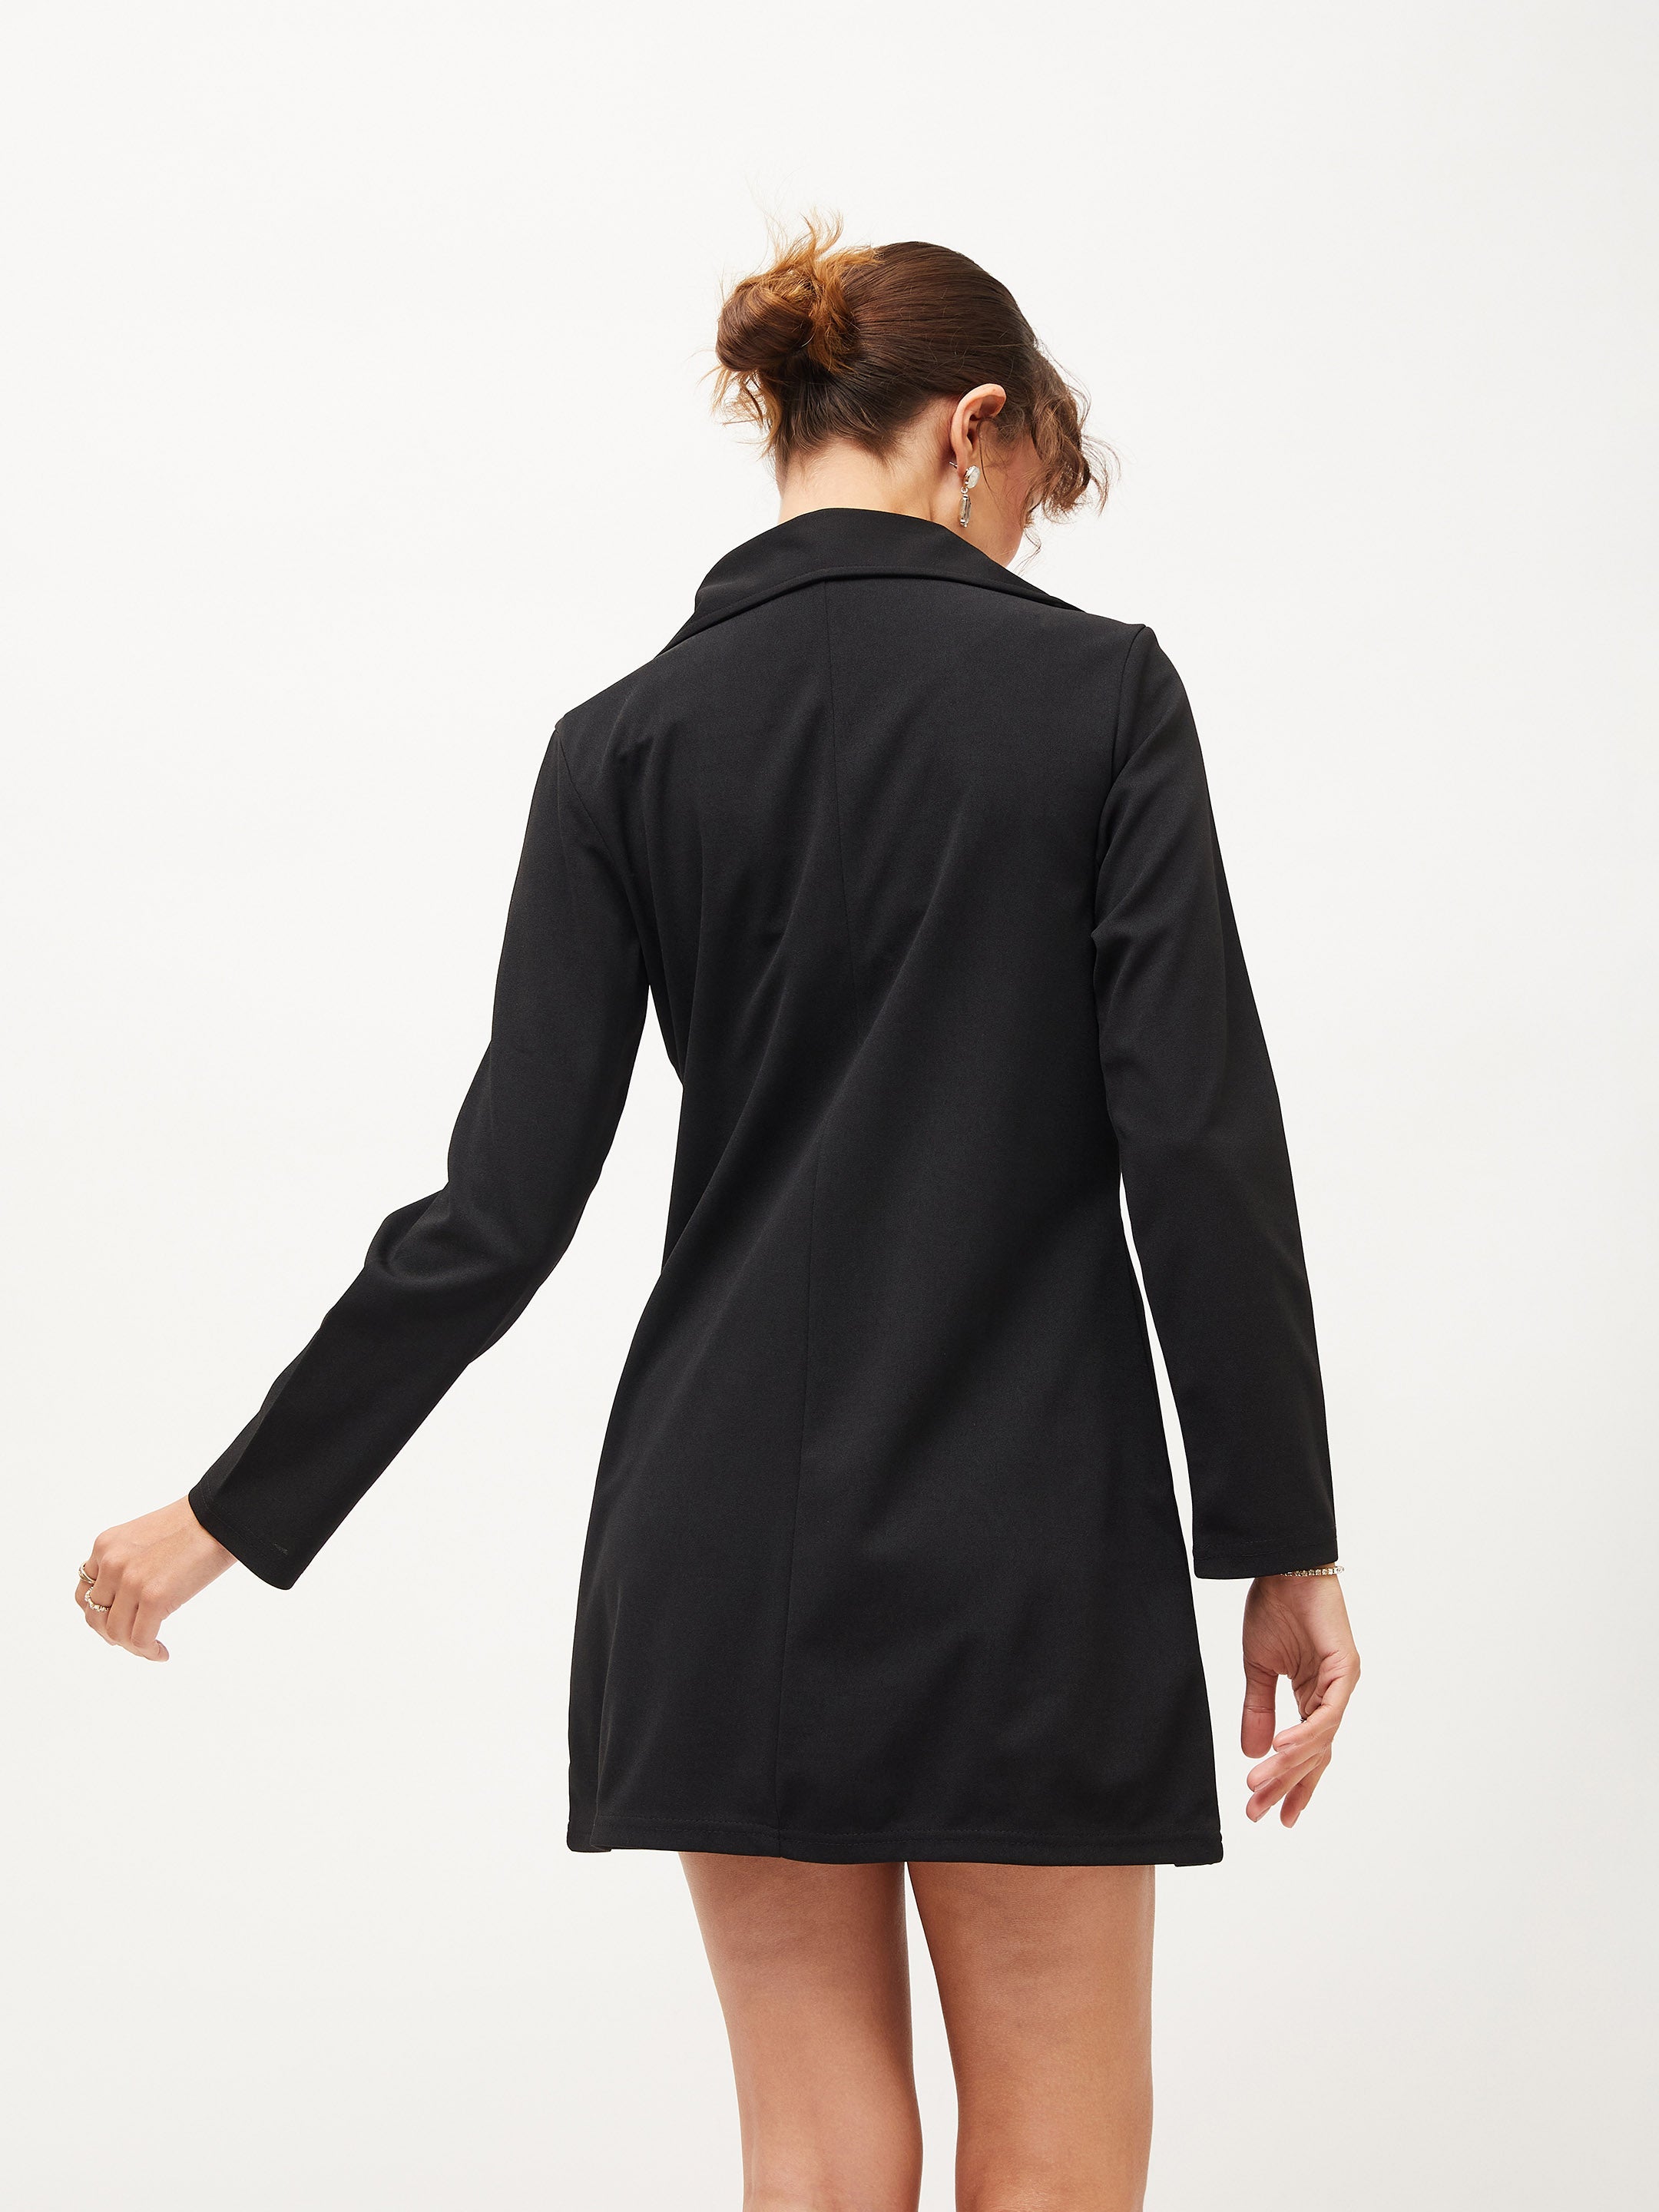 Women's Black Knitted Blazer Dress - Lyush